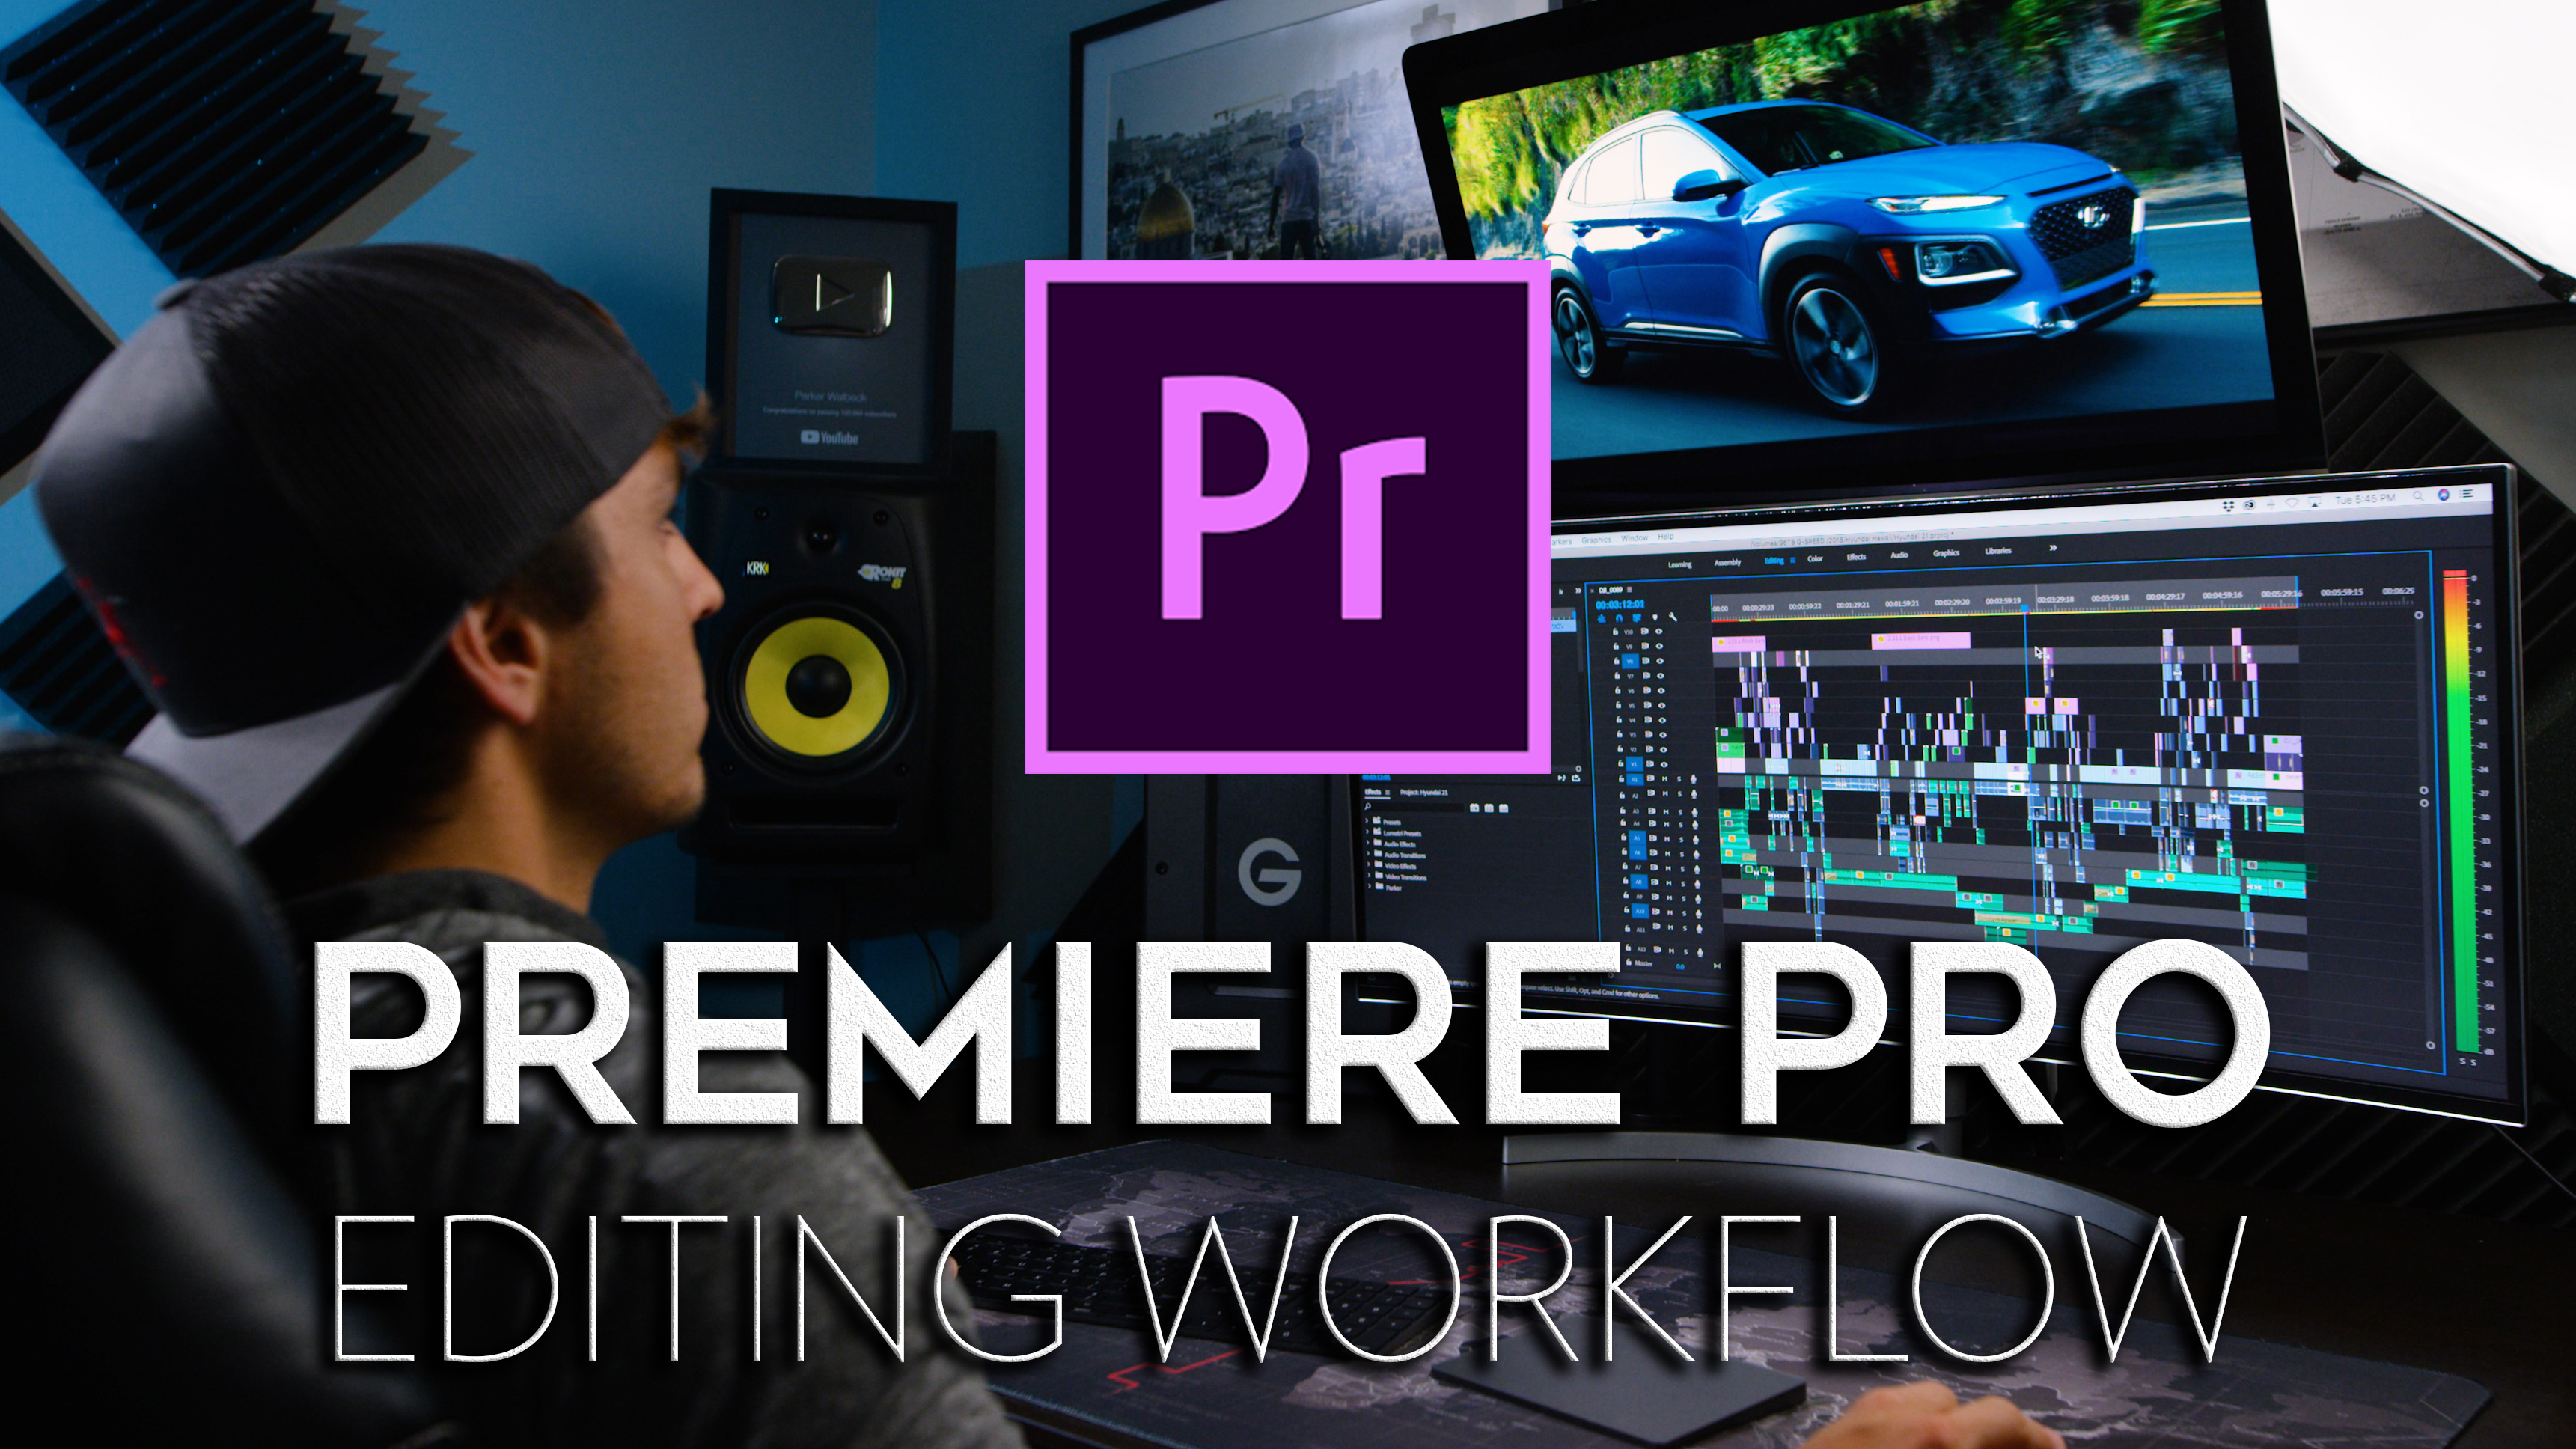 Premier editing software